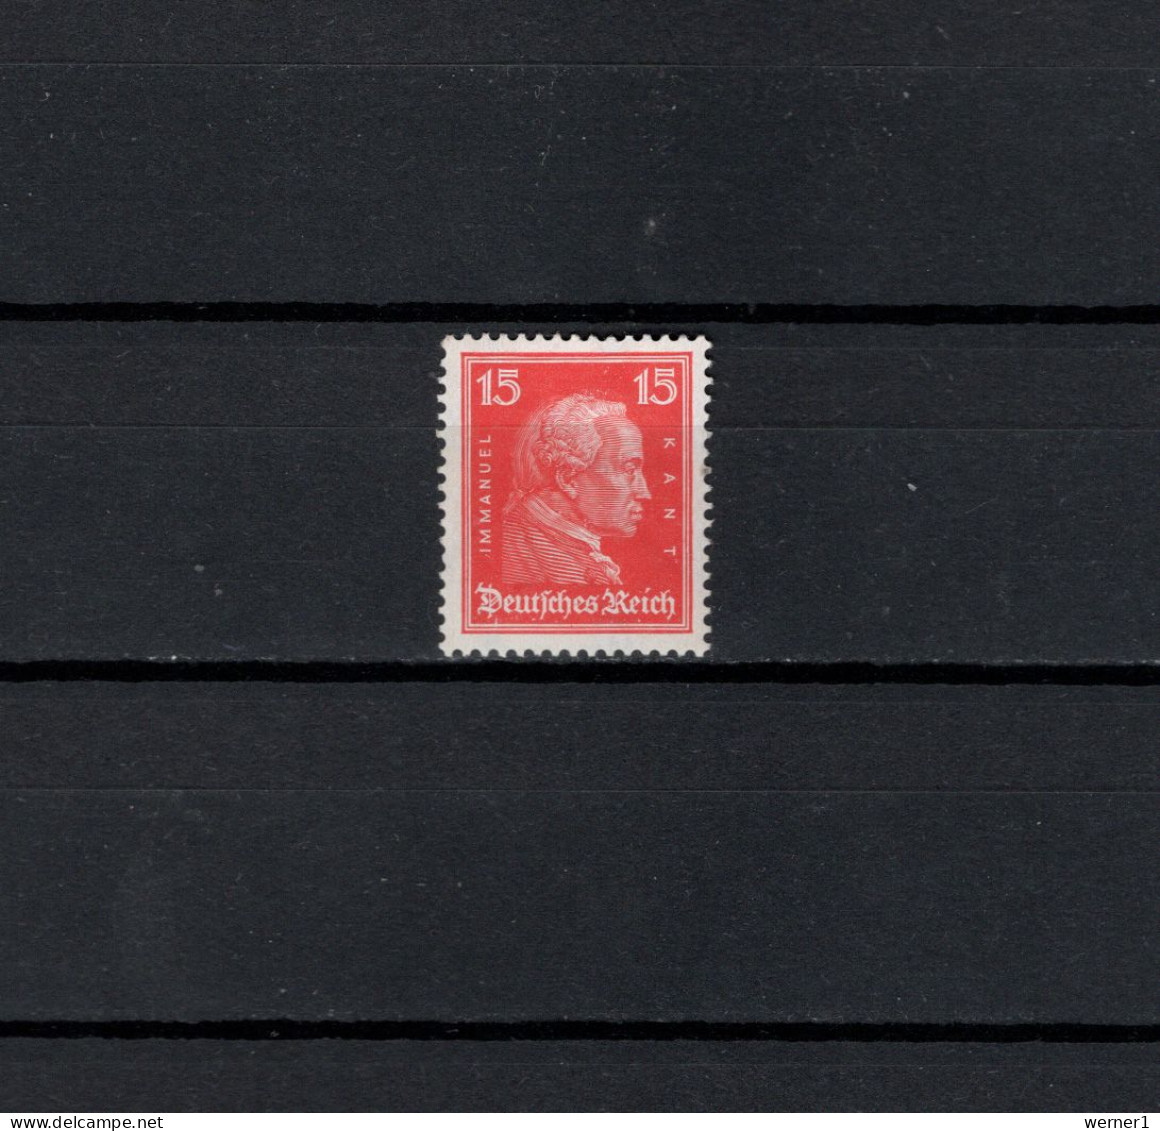 Germany 1926 Immanuel Kant 15pfg Stamp MNH - Europa